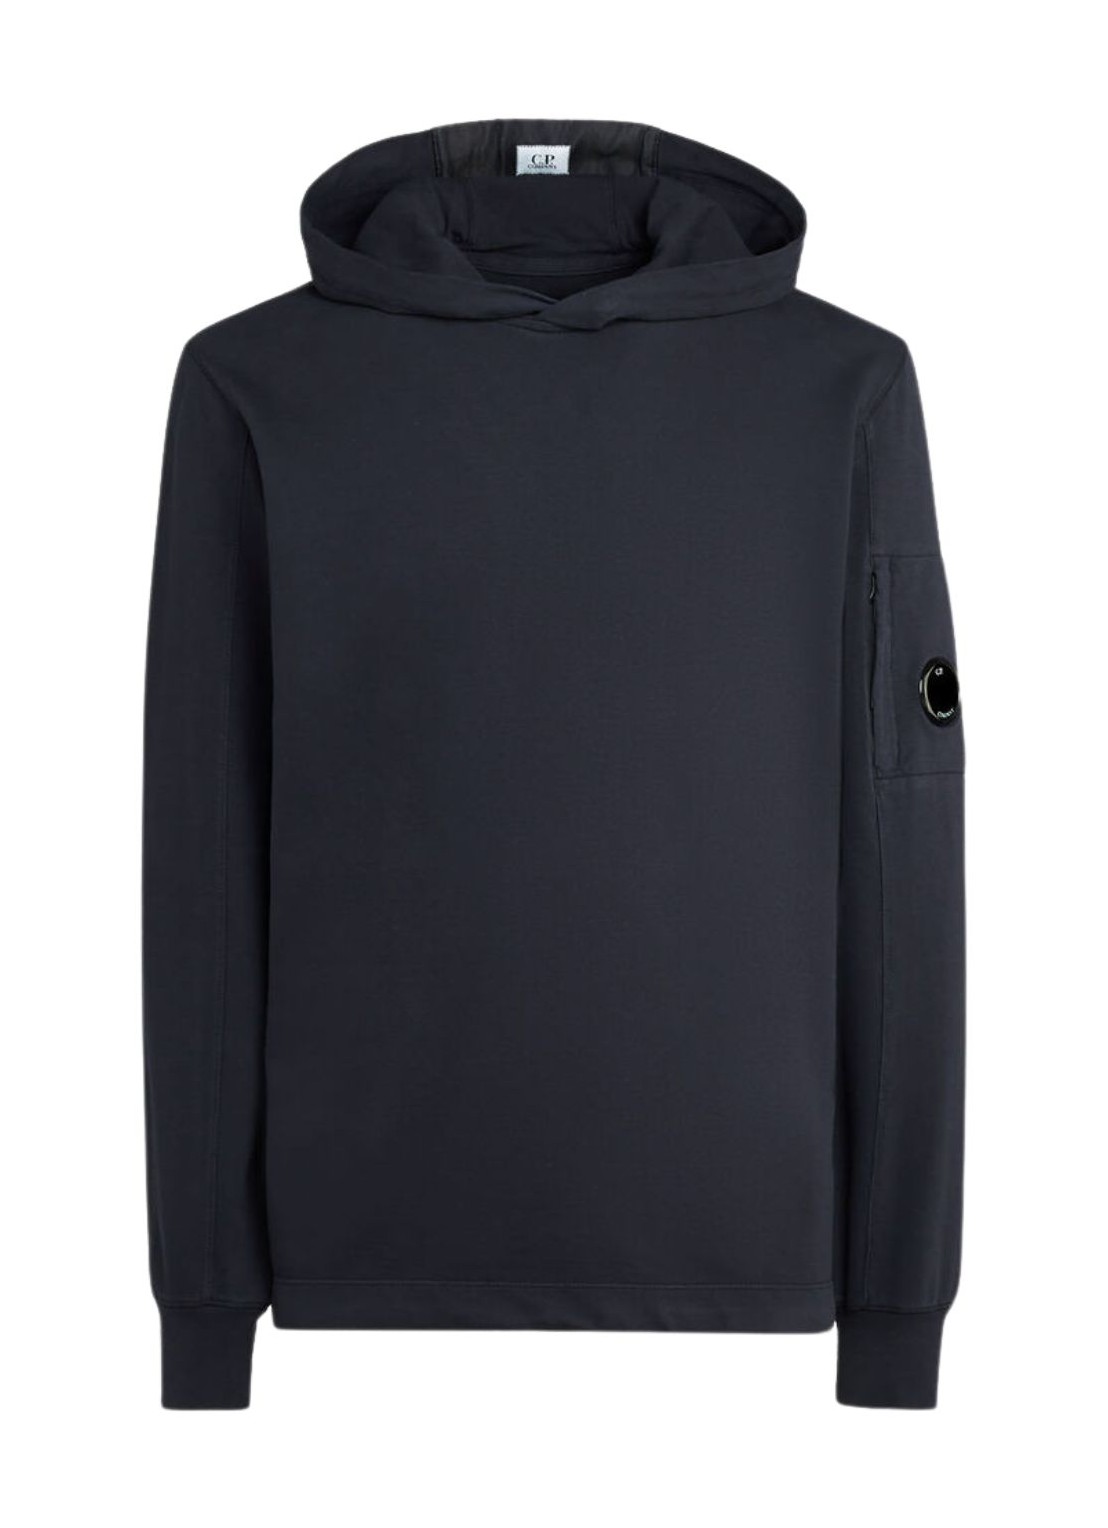 Sudadera c.p.company sweater man light fleece hoodie 16cmss033a002246g 888 talla M
 